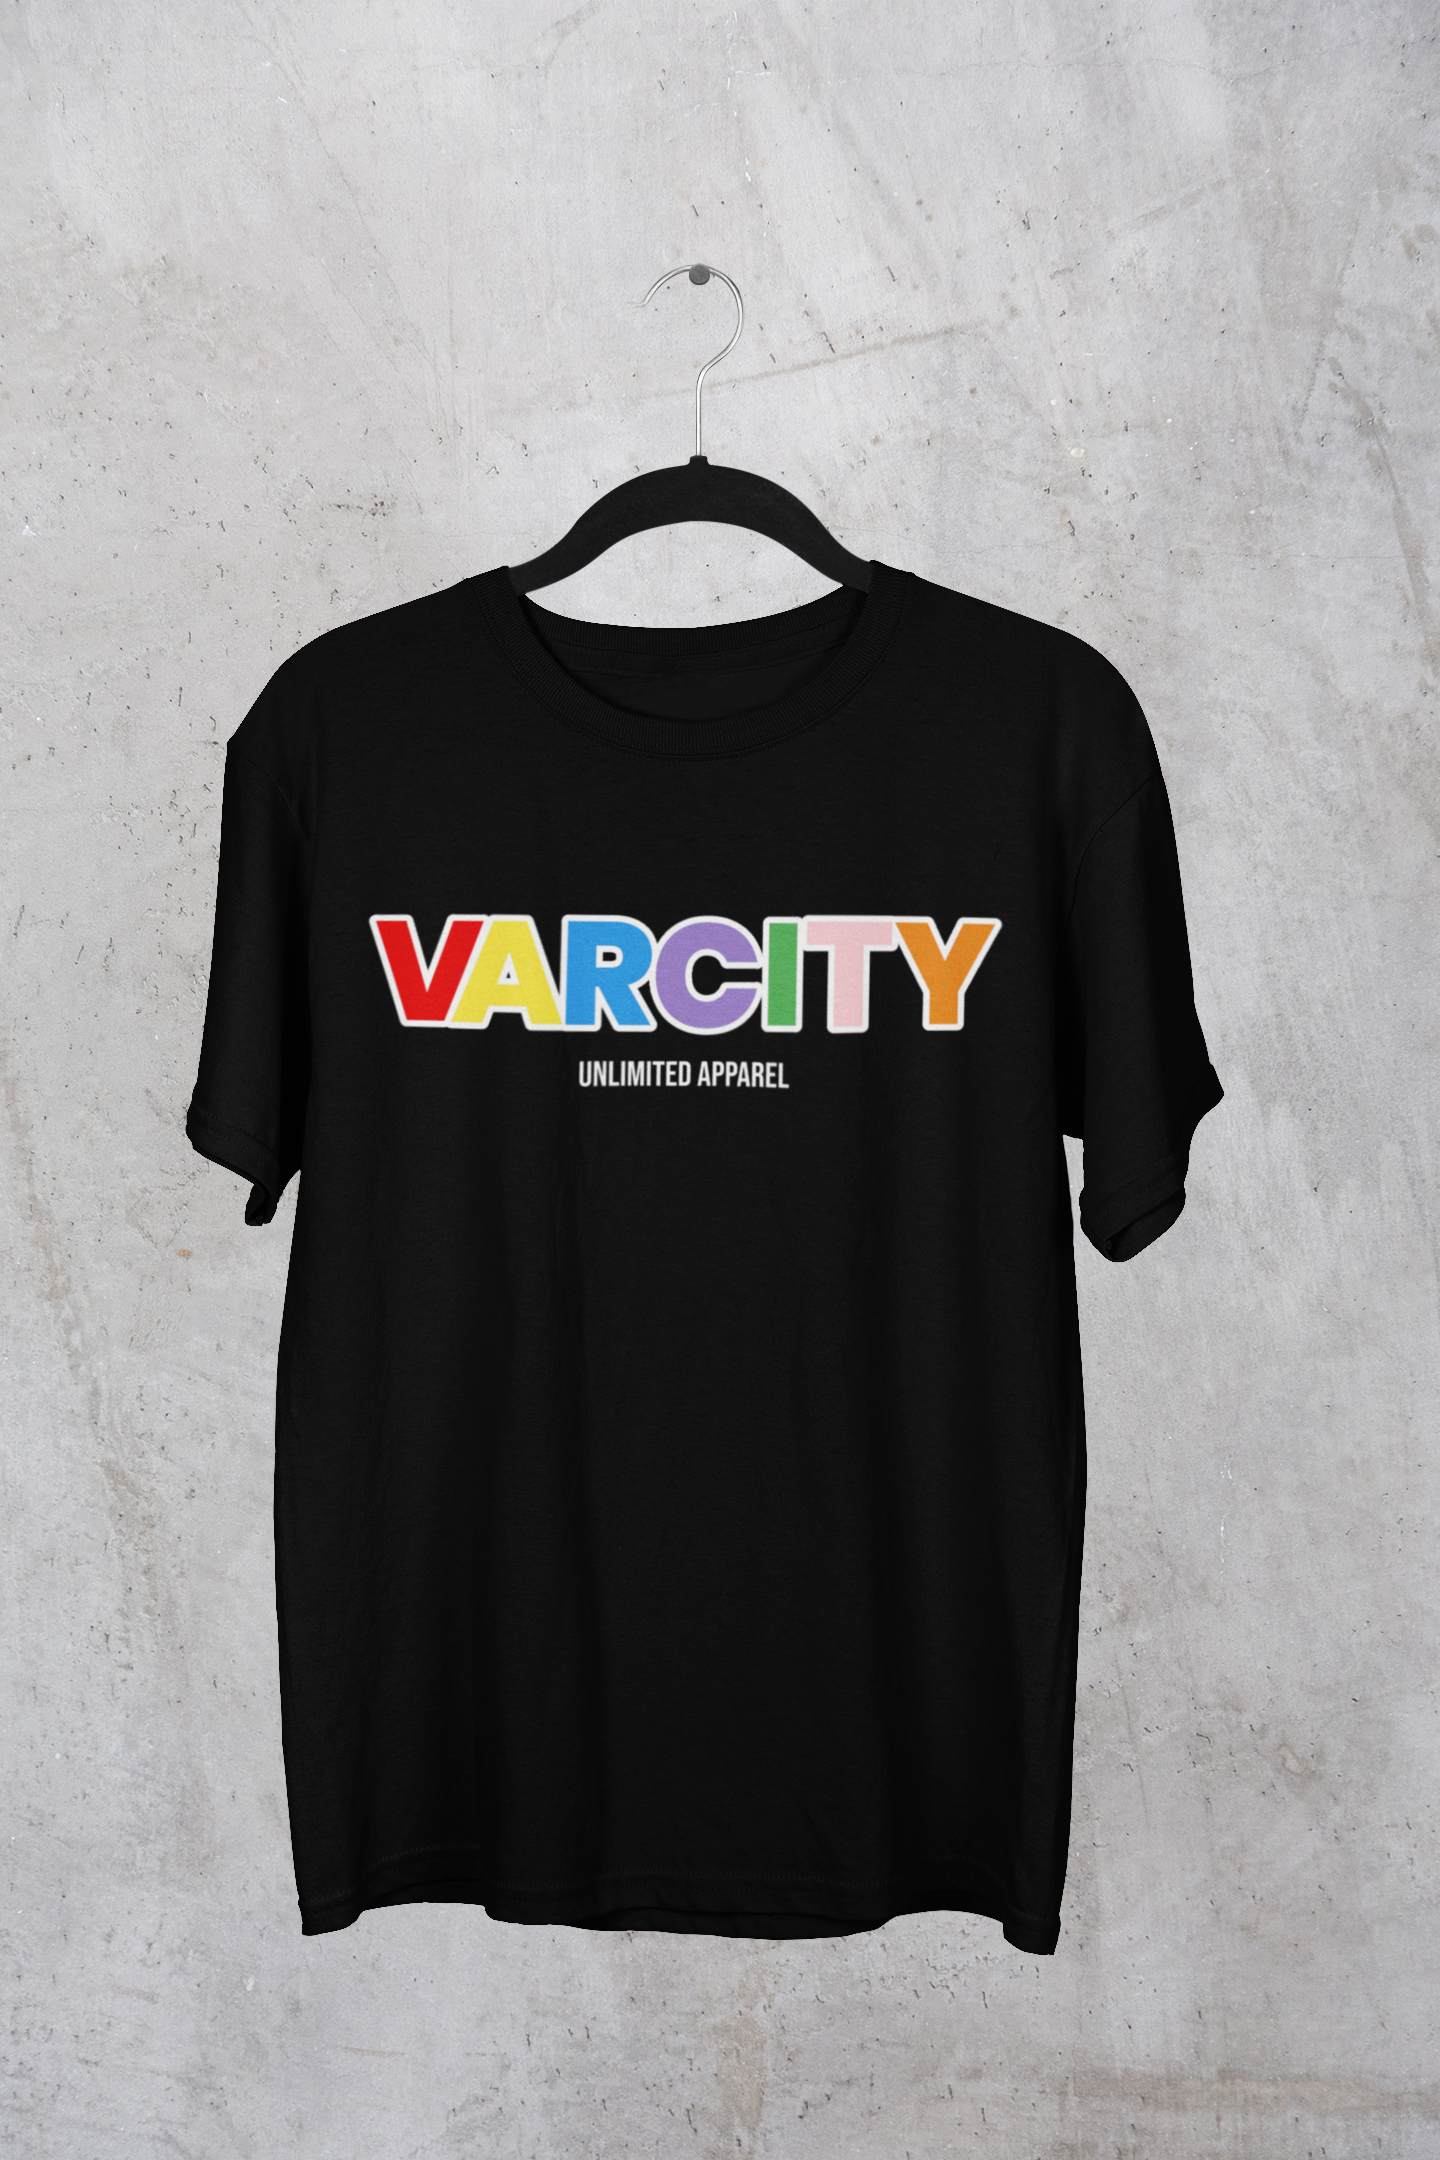 Varcity Unlimited Apparel Statement T Shirt Black